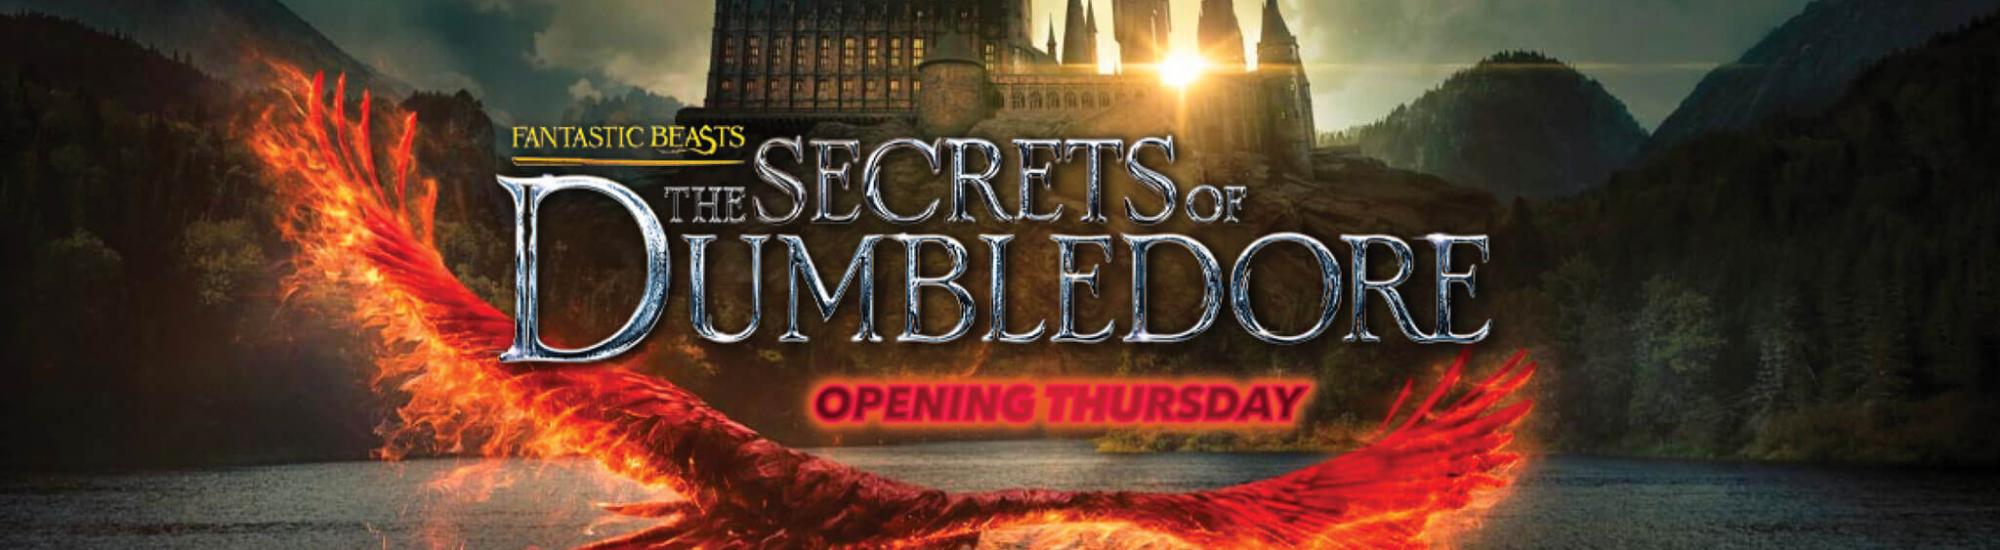 Fantastic Beasts The Secrets of Dumbledore banner